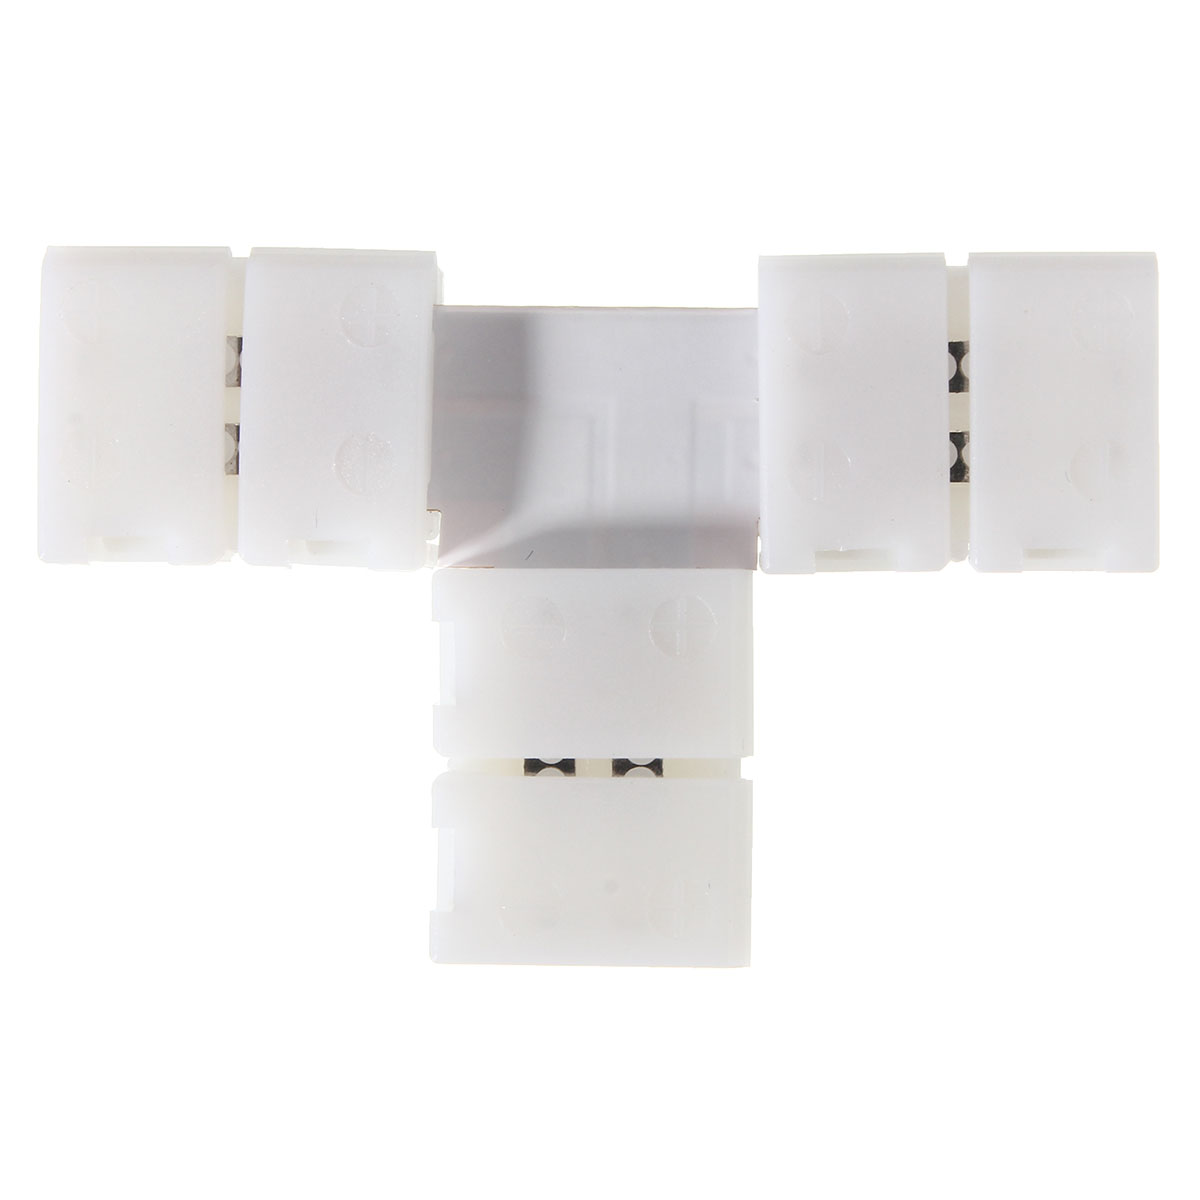 10mm-TL-Shape-2-Pin-5050-PCB-LED-Strip-Corner-Connector-for-Single-Color-Lighting-1087475-5